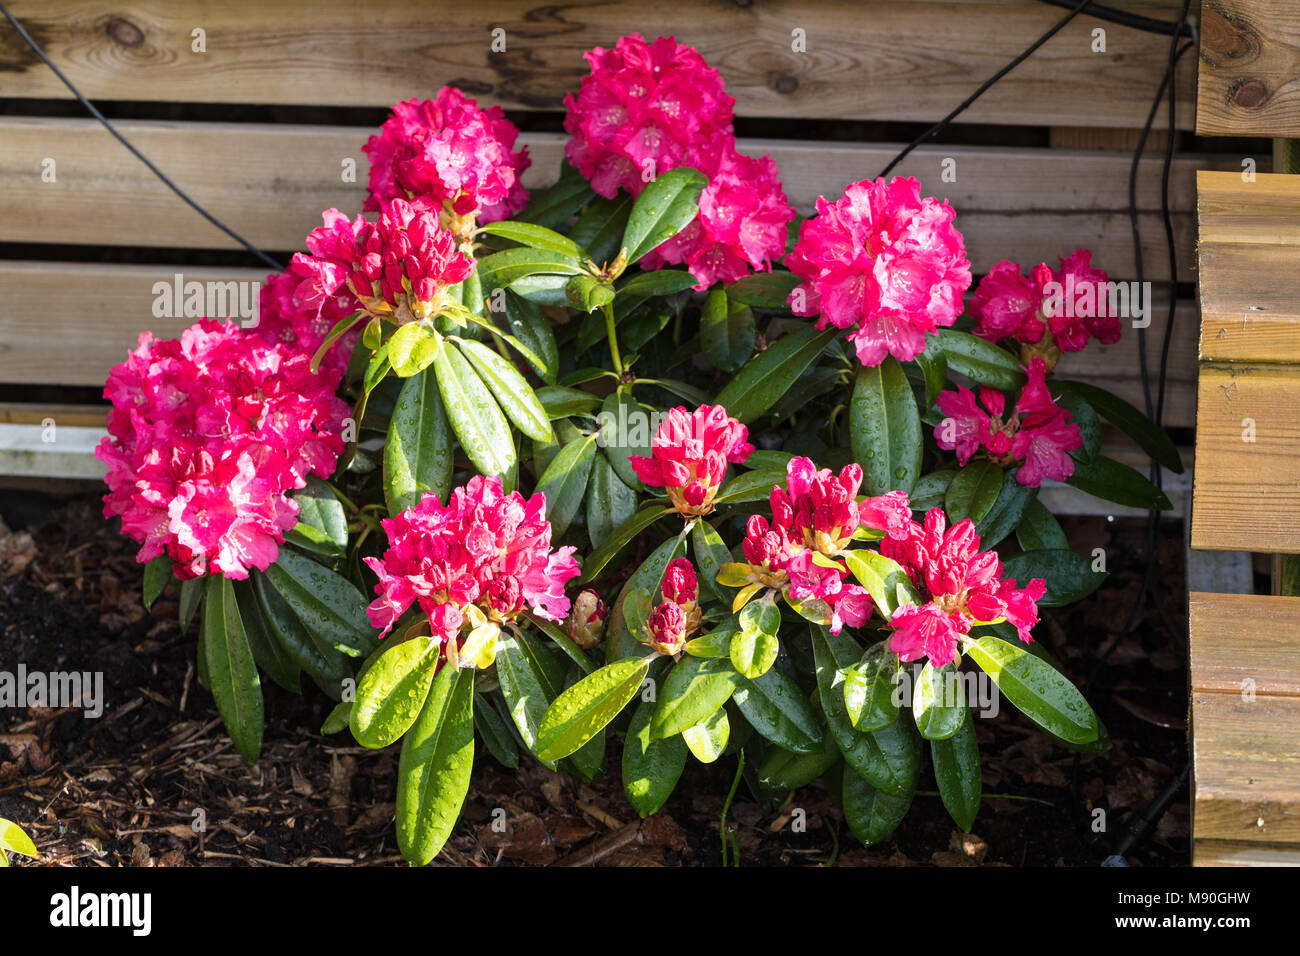 'Morgenrot' Yakushima rhododendron, Praktrododendron (Rhododendron Yakushimanum) Stock Photo